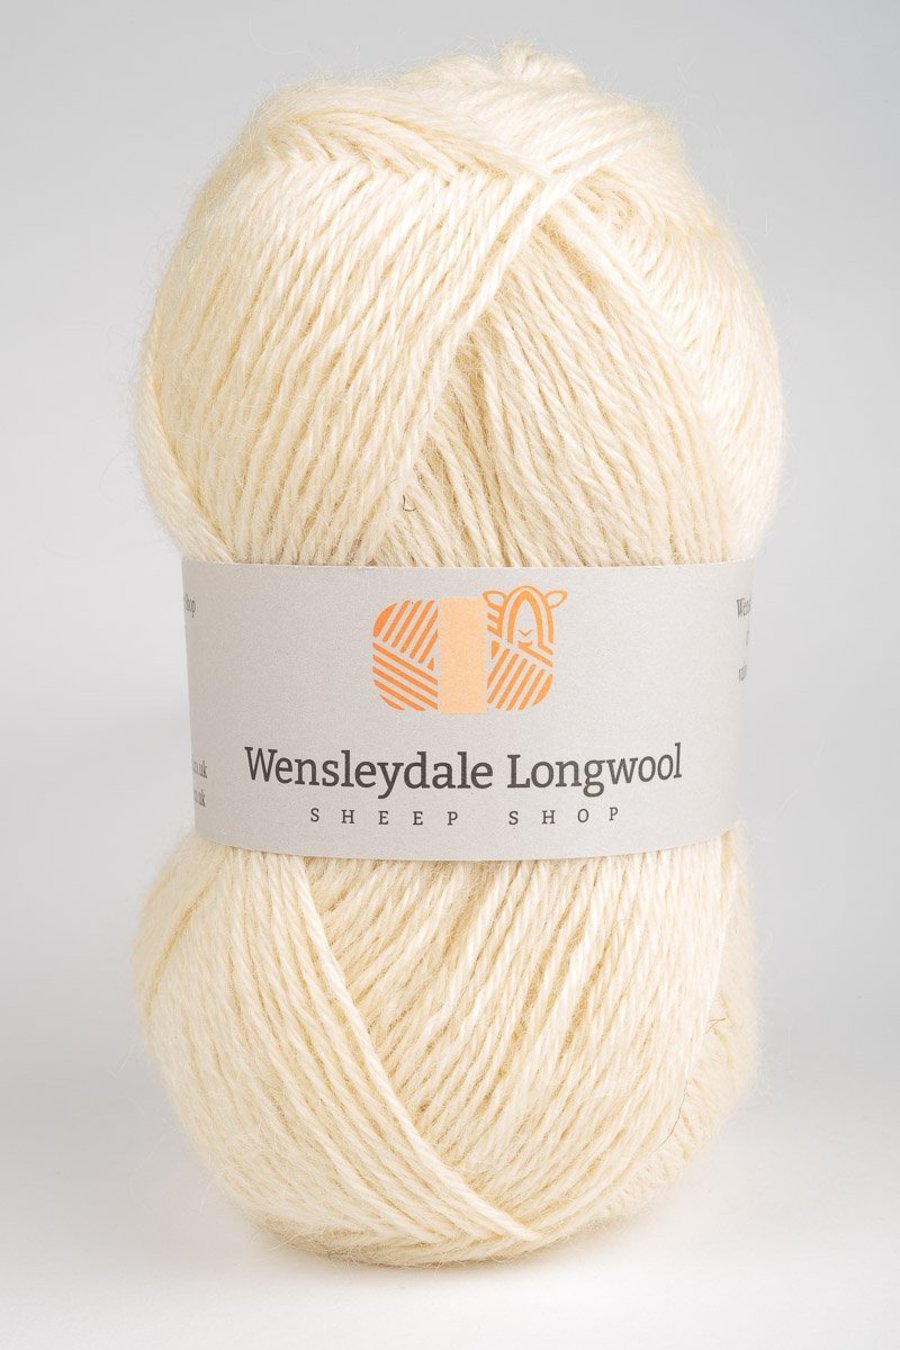 Wensleydale Longwool Double Knit Yarn - Natural Cream